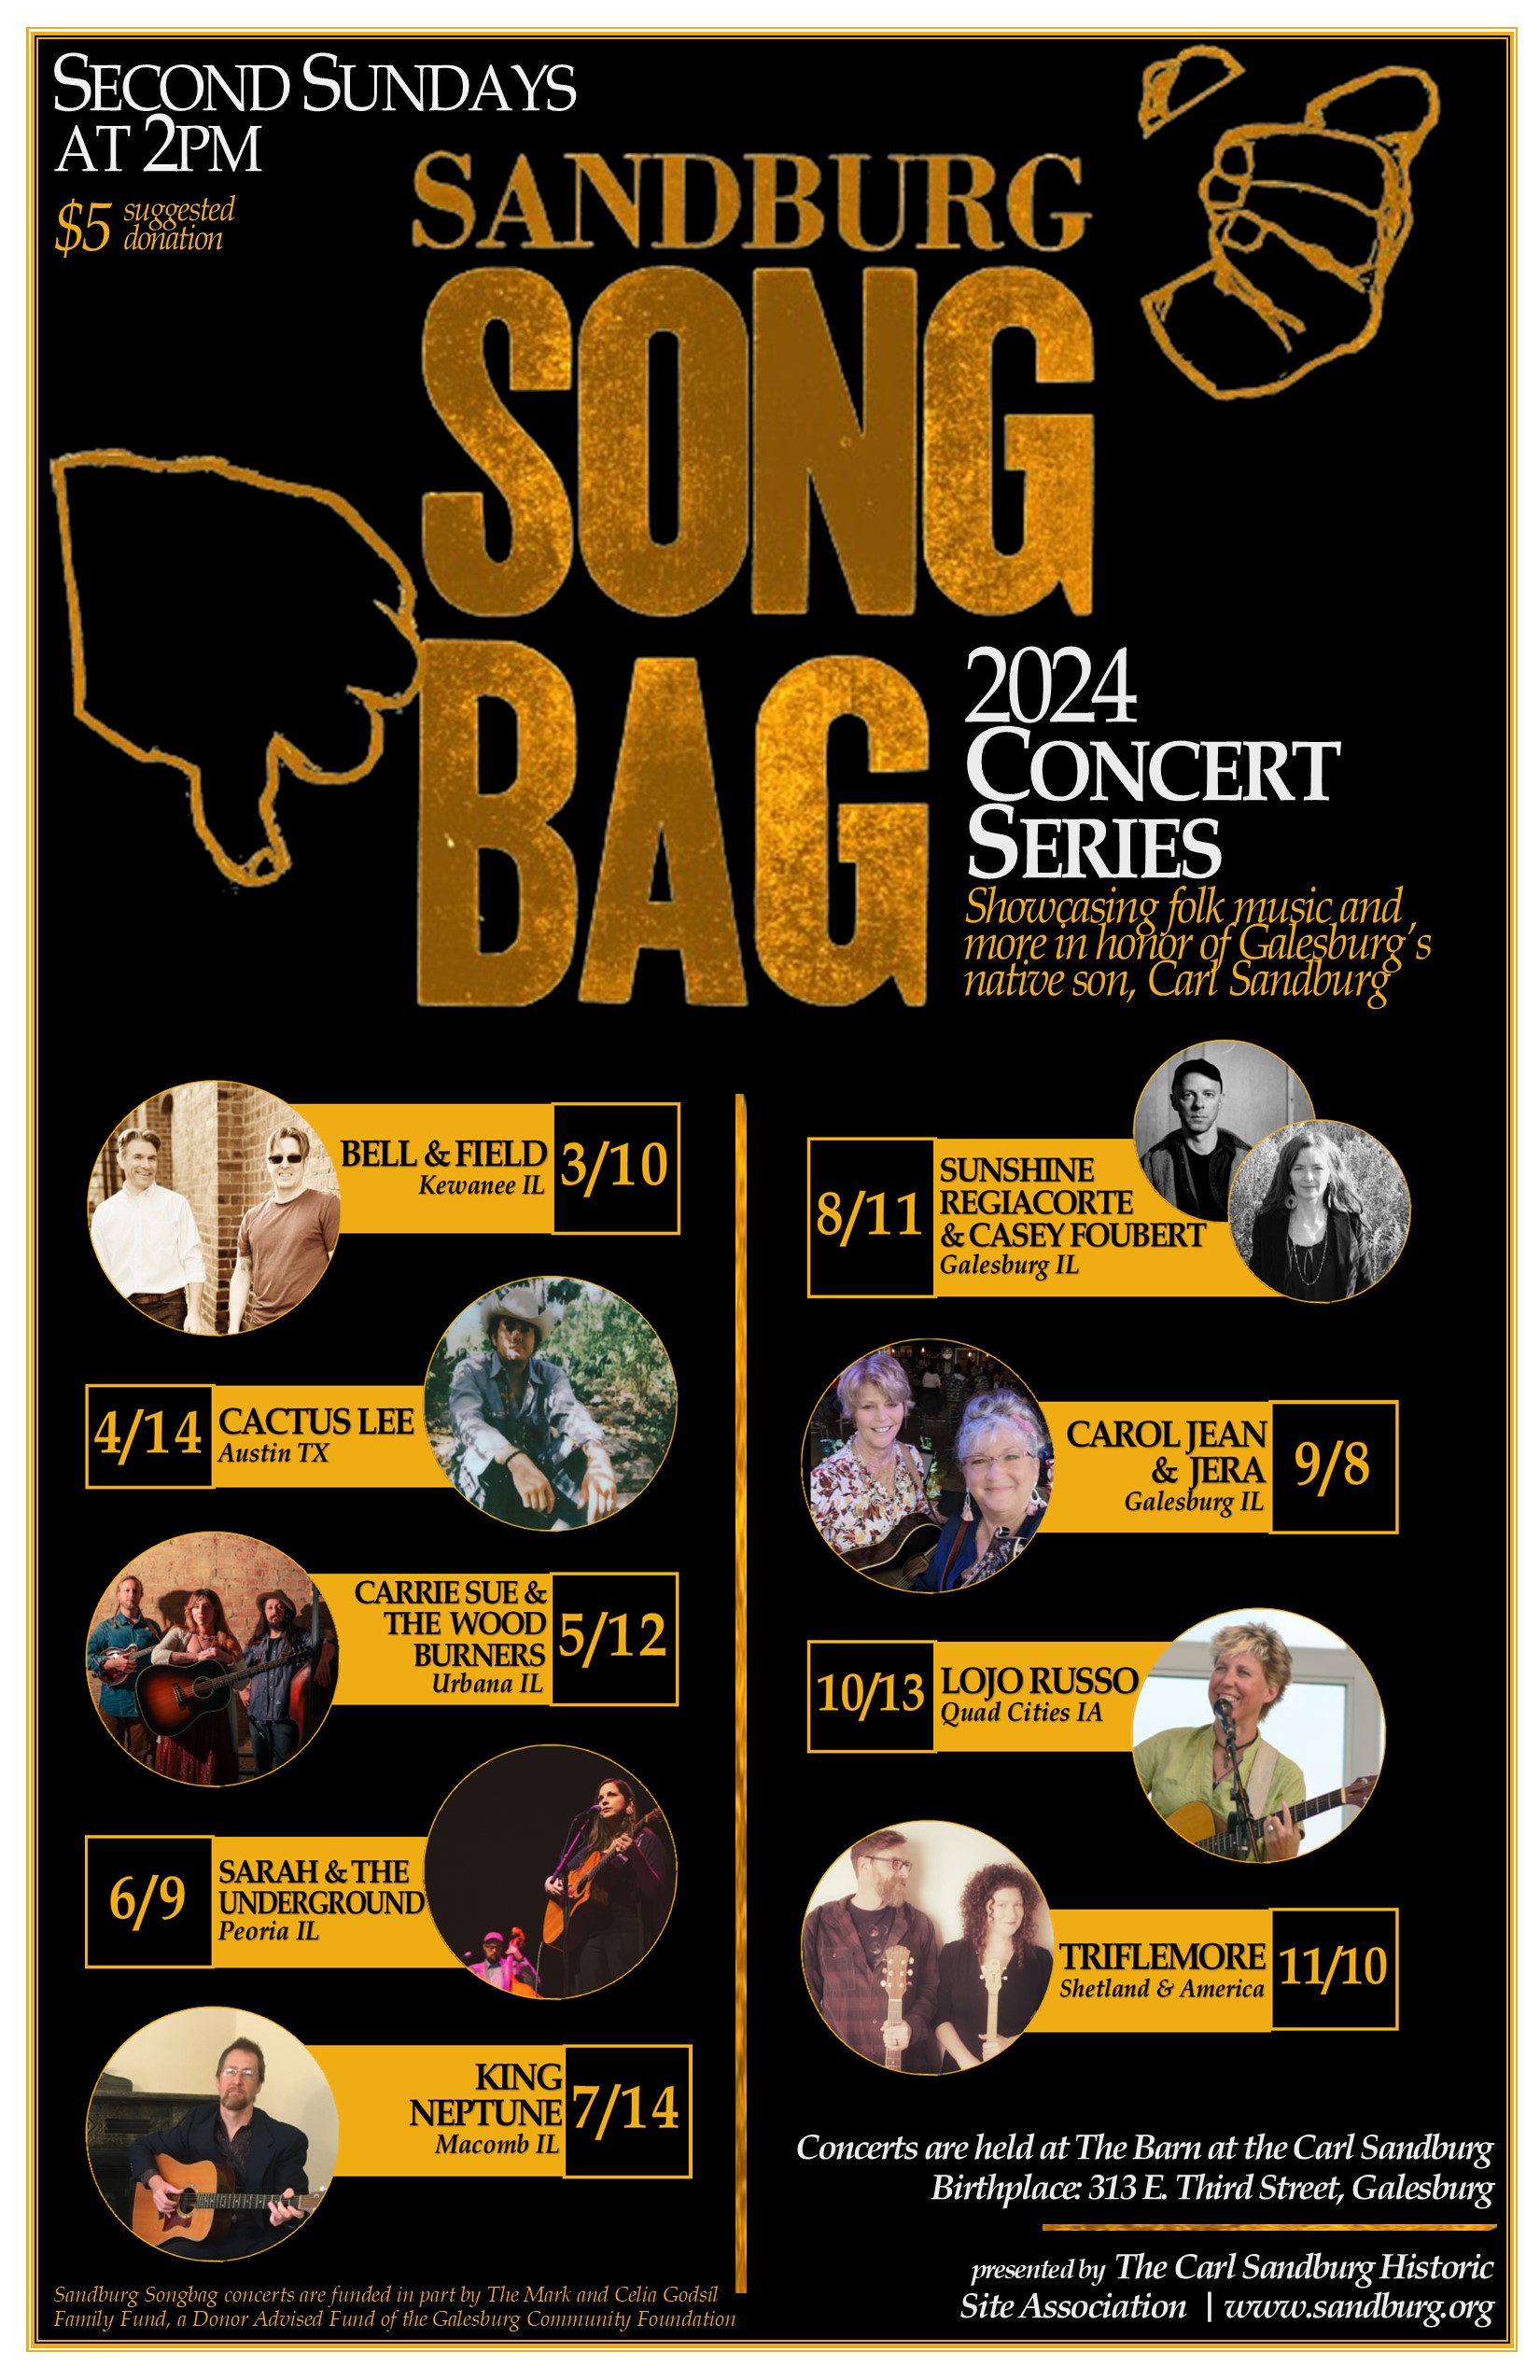 Cactus Lee - Songbag Concert - 14 April 2024 - 2-4pm